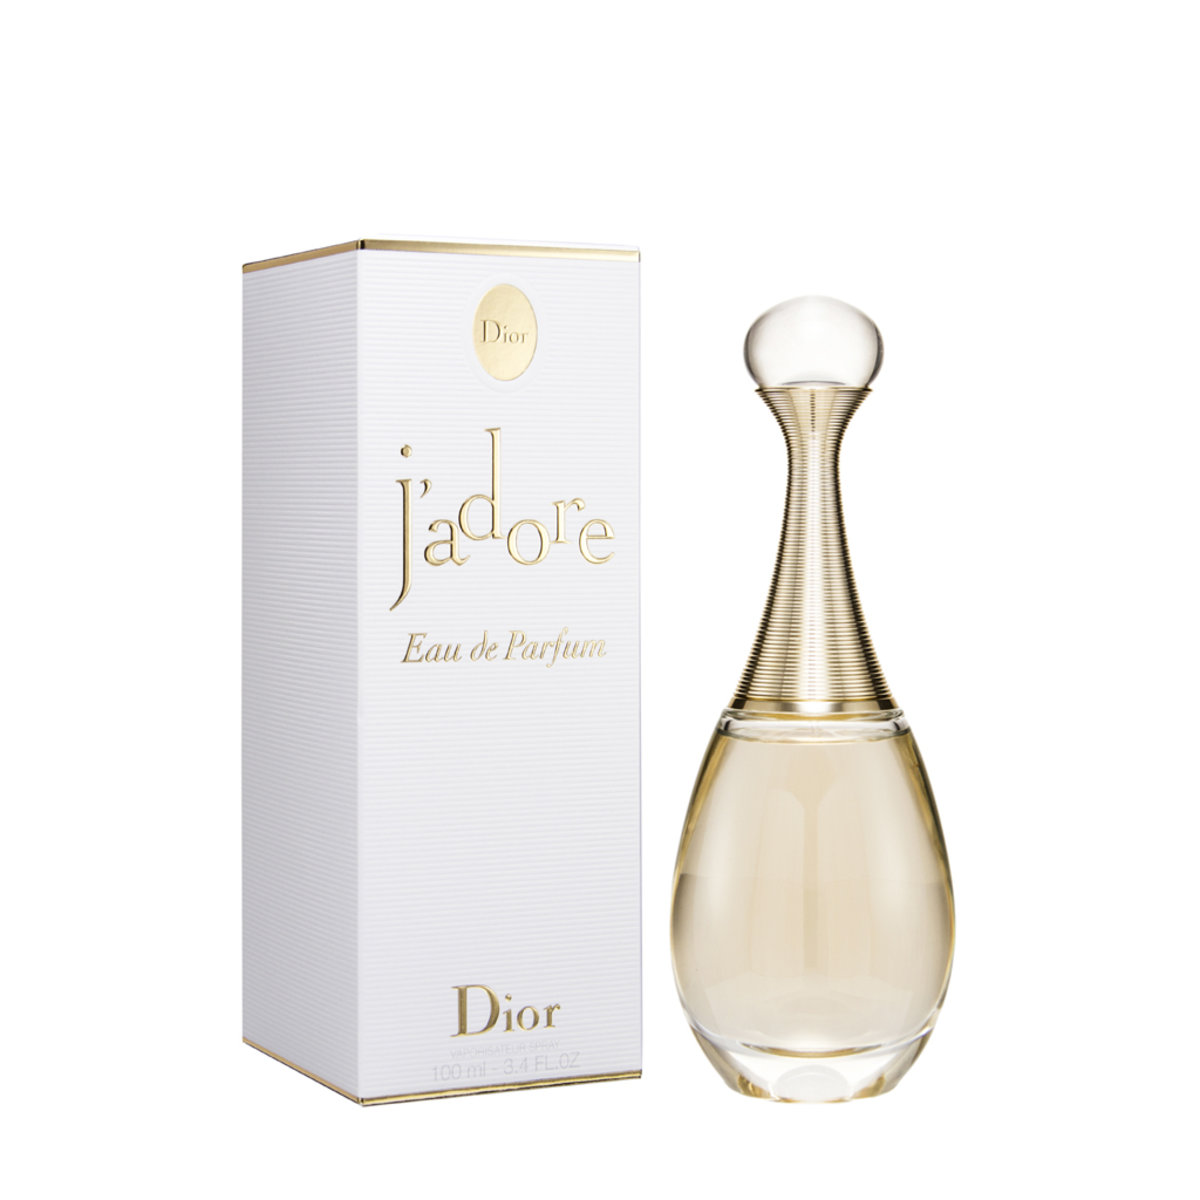 jadore perfume price 100ml